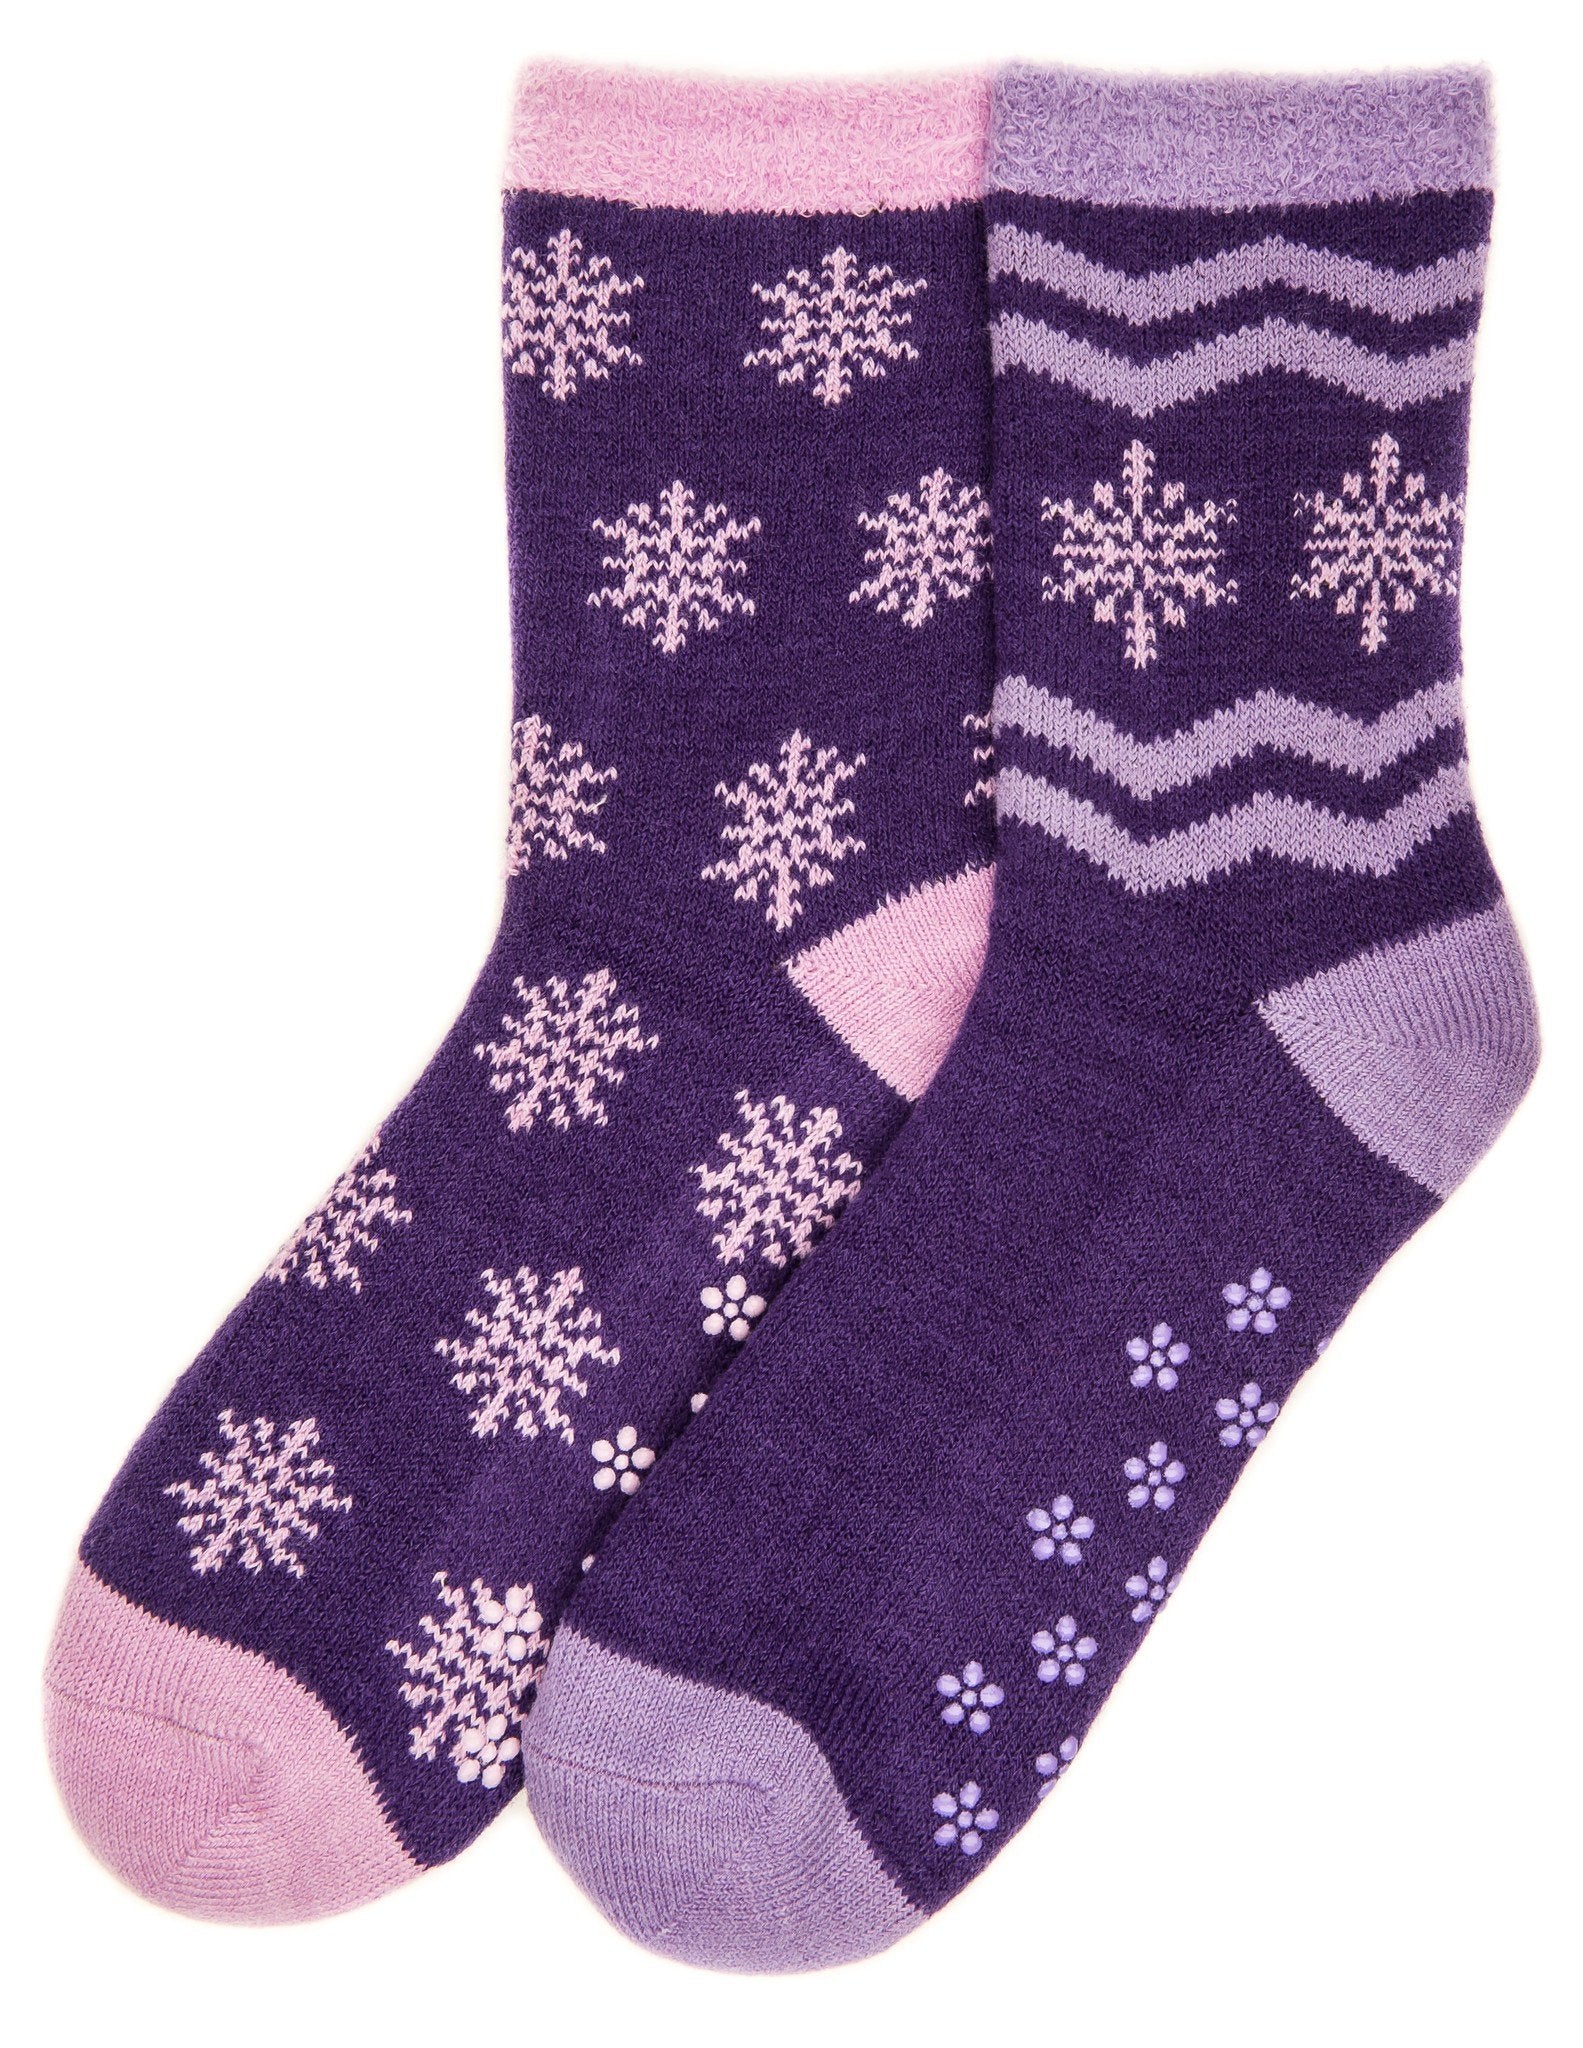 Women's Soft Premium Double Layer Winter Crew Socks - 2 Pairs - Set A5